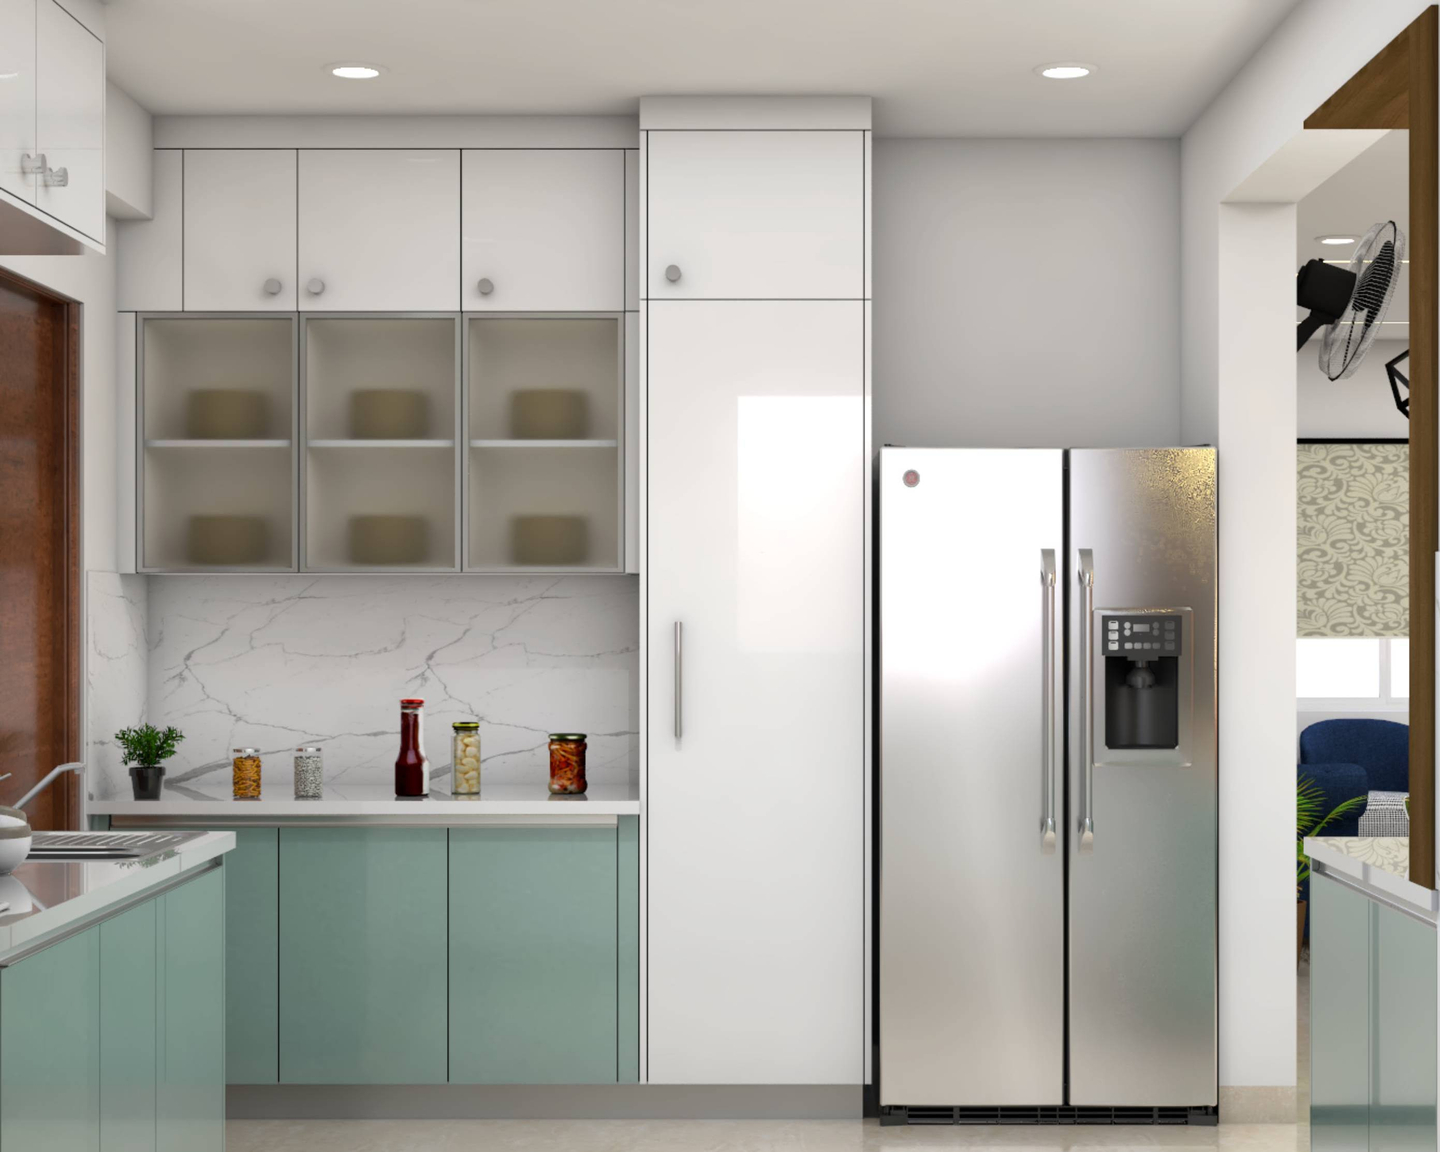 Spacious Modular U-Shaped Kitchen Design With Pastel Blue Cabinet